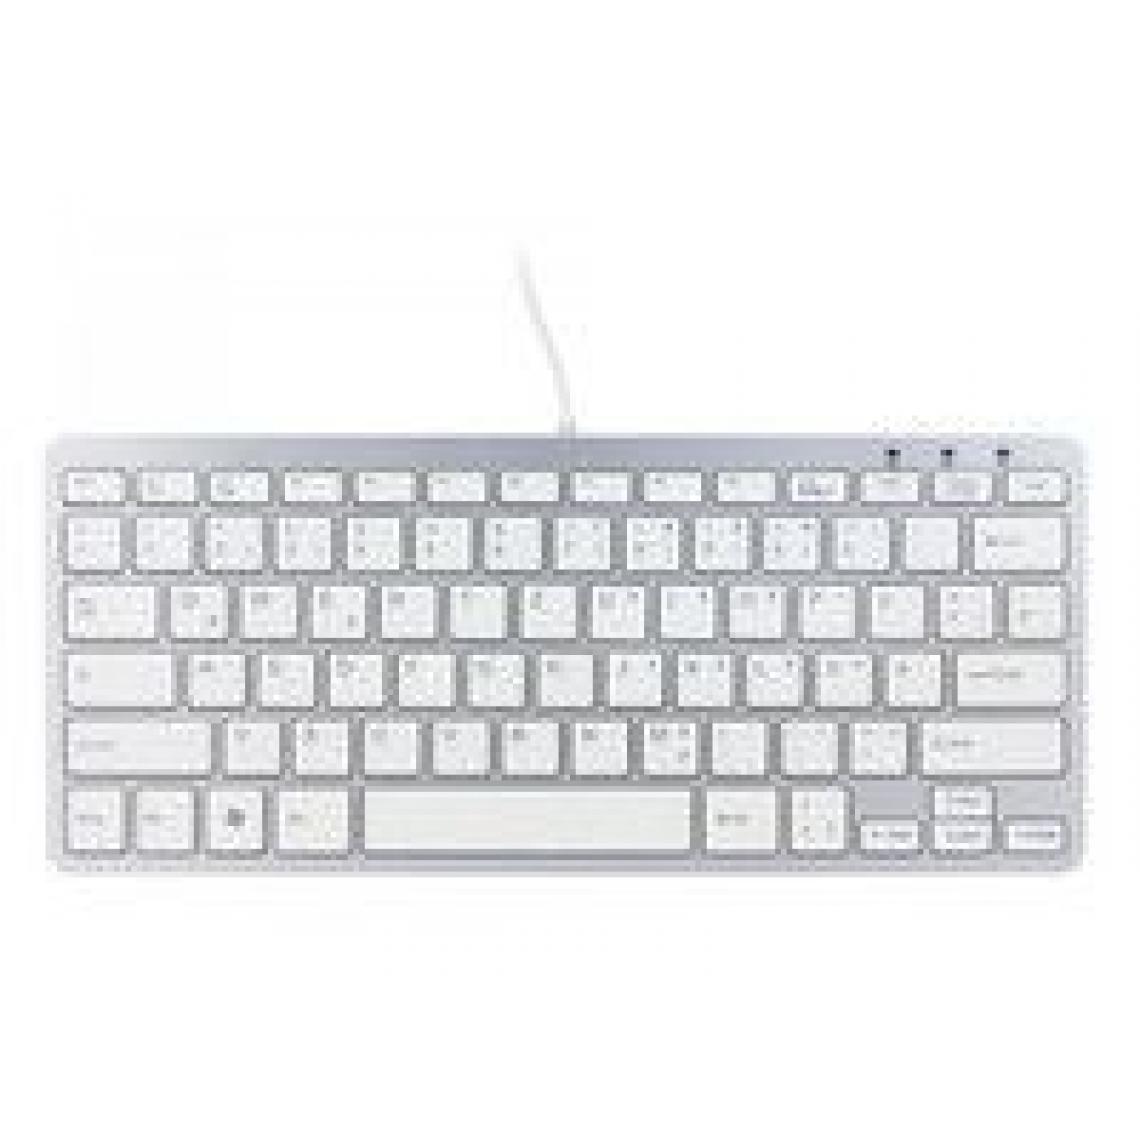 Inconnu - Ergo compact keyboard QWERTZ, Silver/White - Clavier